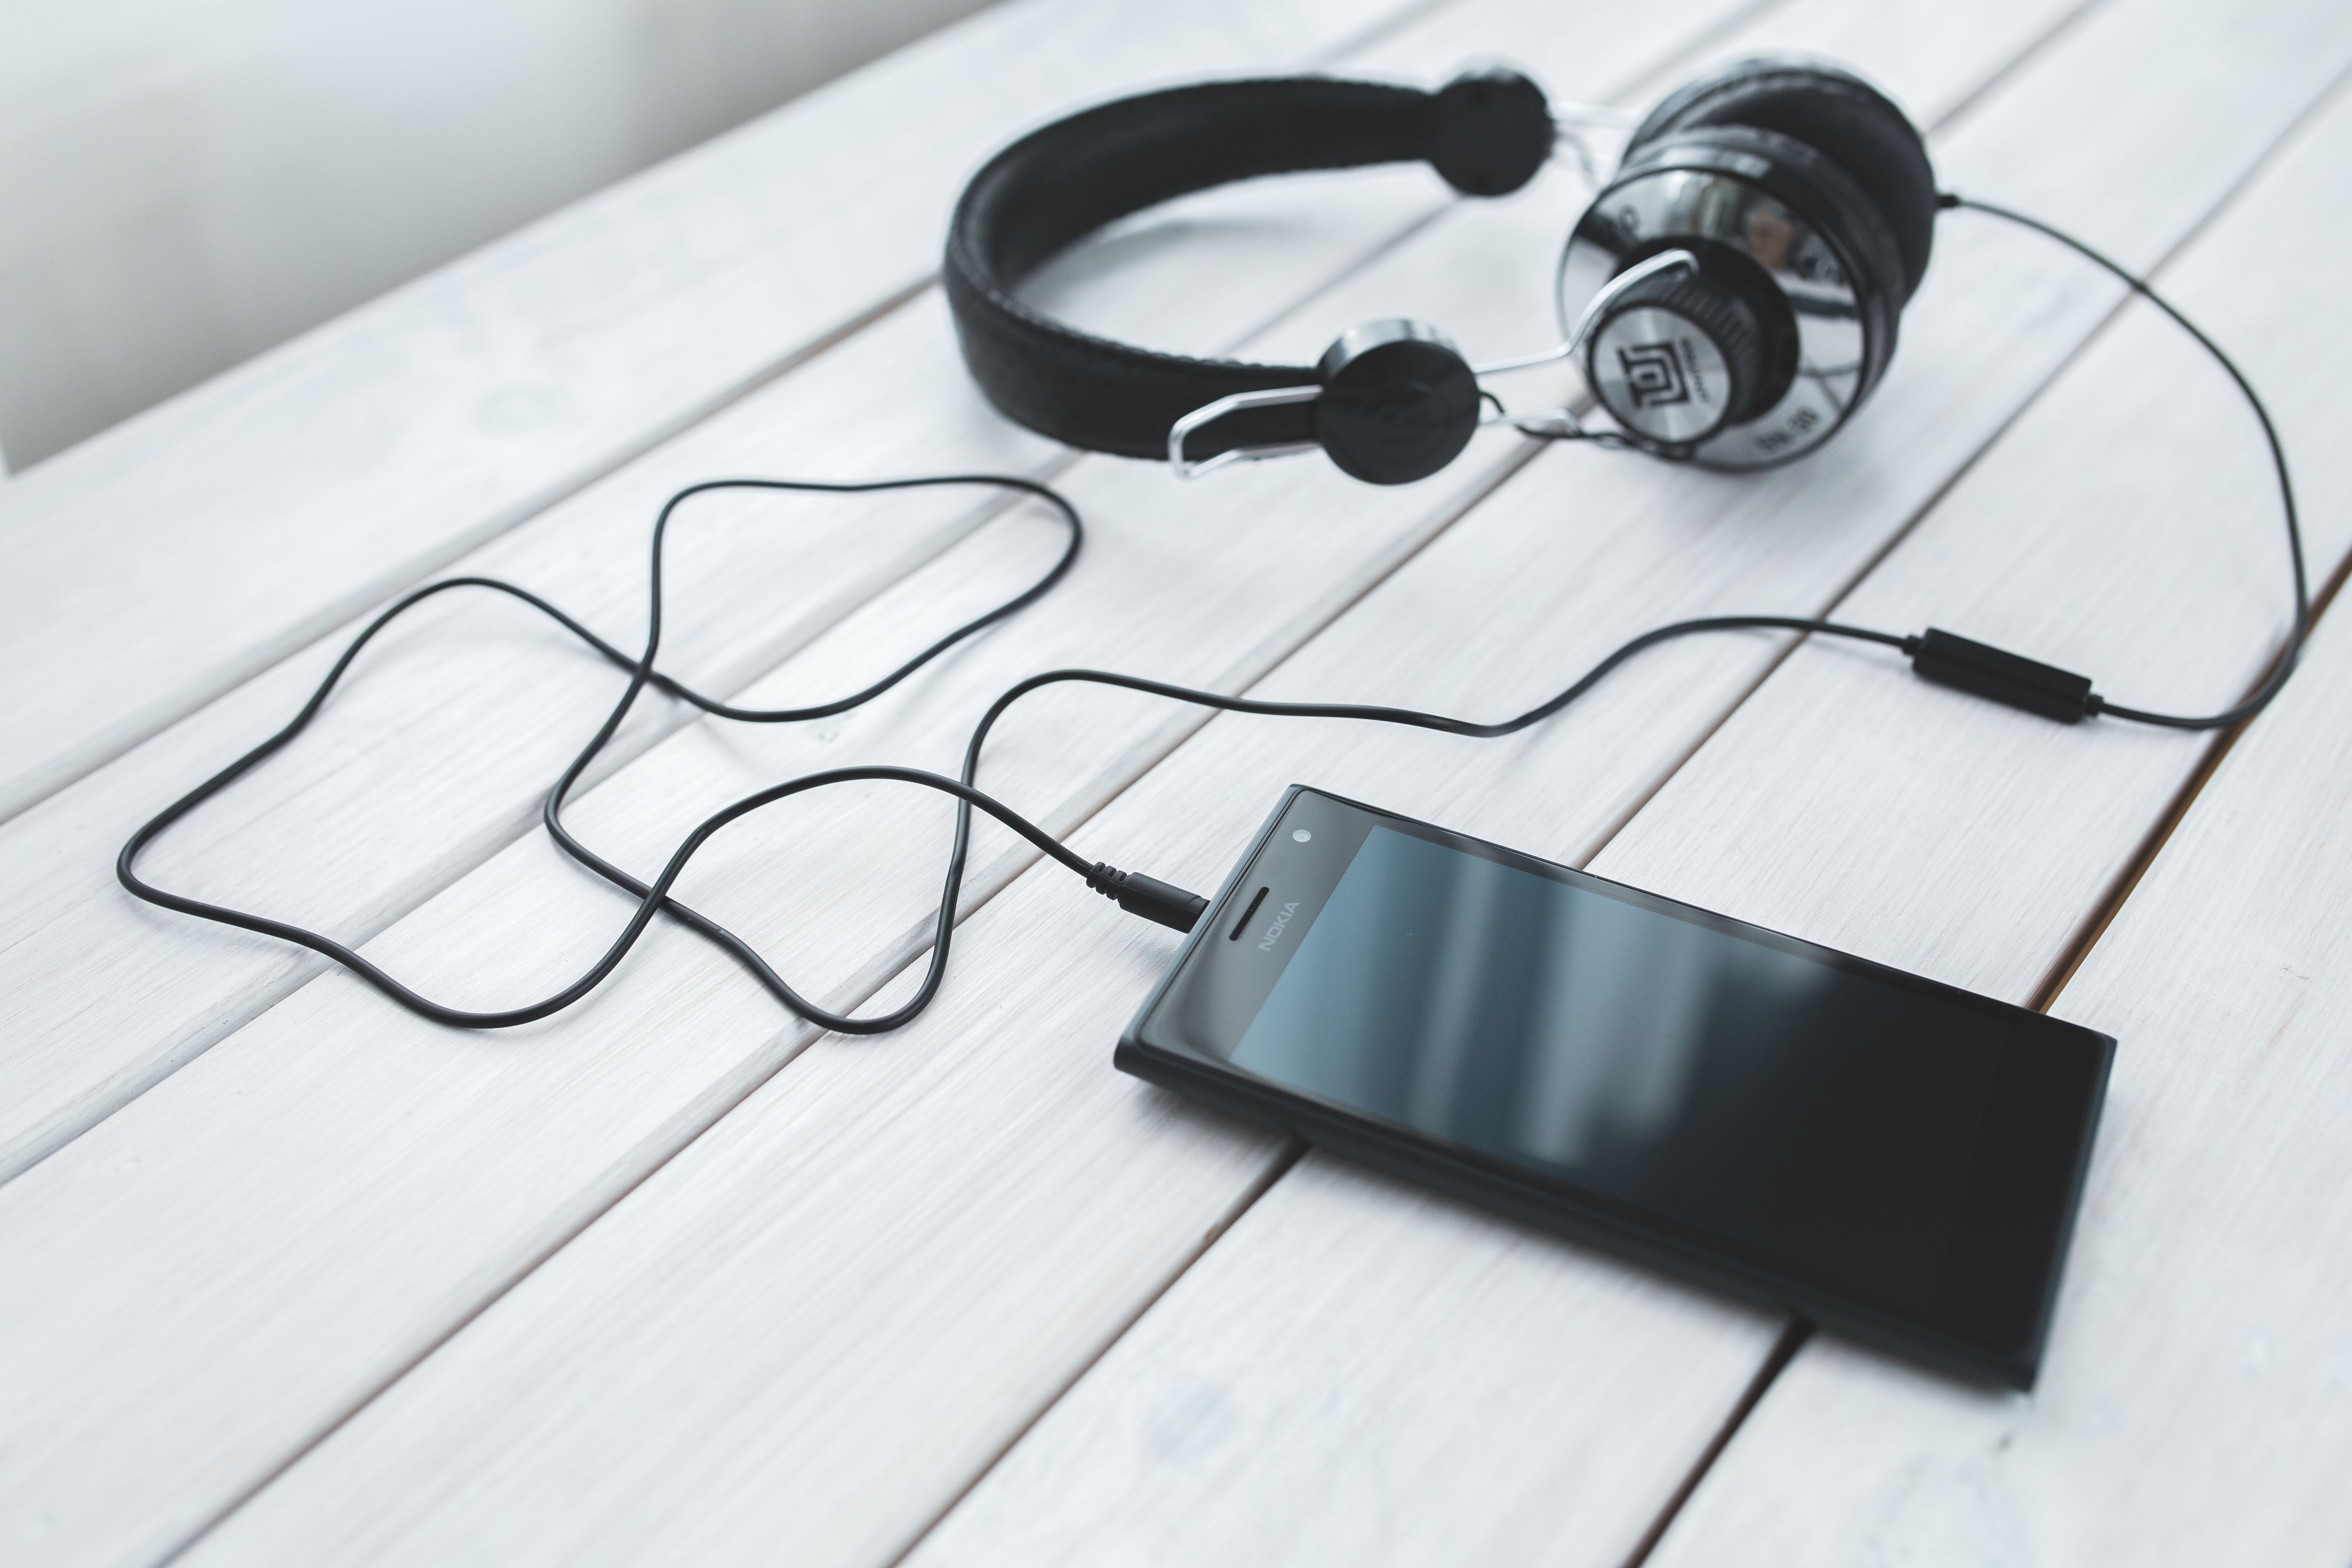 Black smartphone and headphones on a desk photo